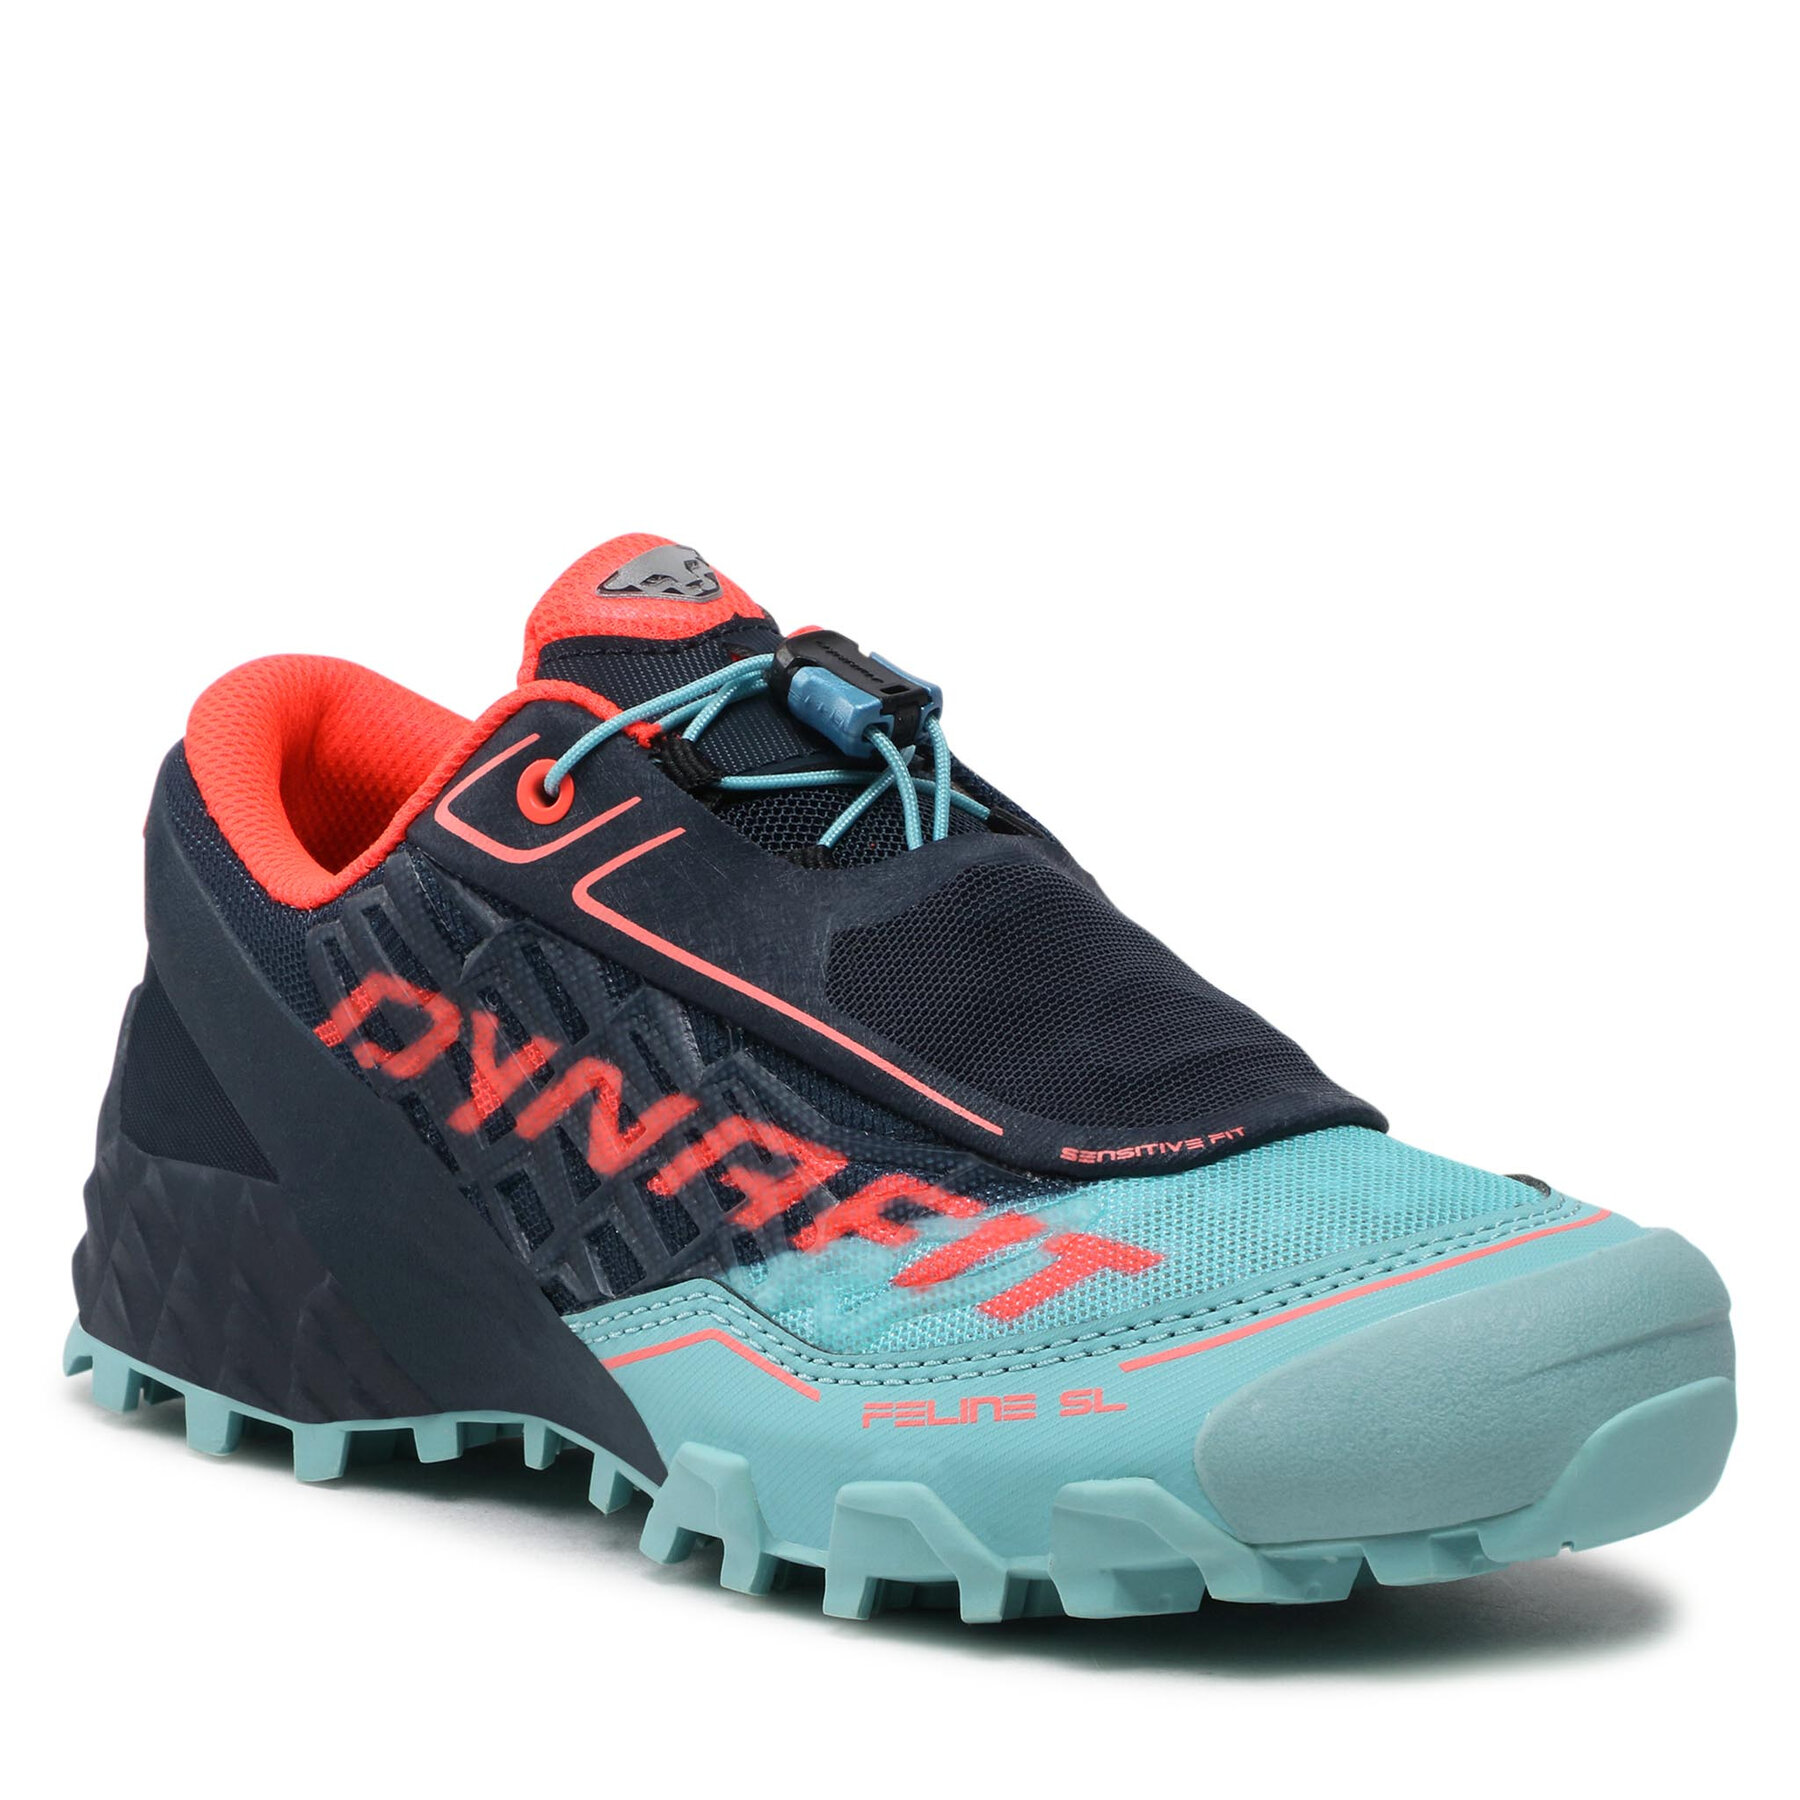 Čevlji Dynafit Feline Sl W 64054 Marine Blue/Blueberry 8051